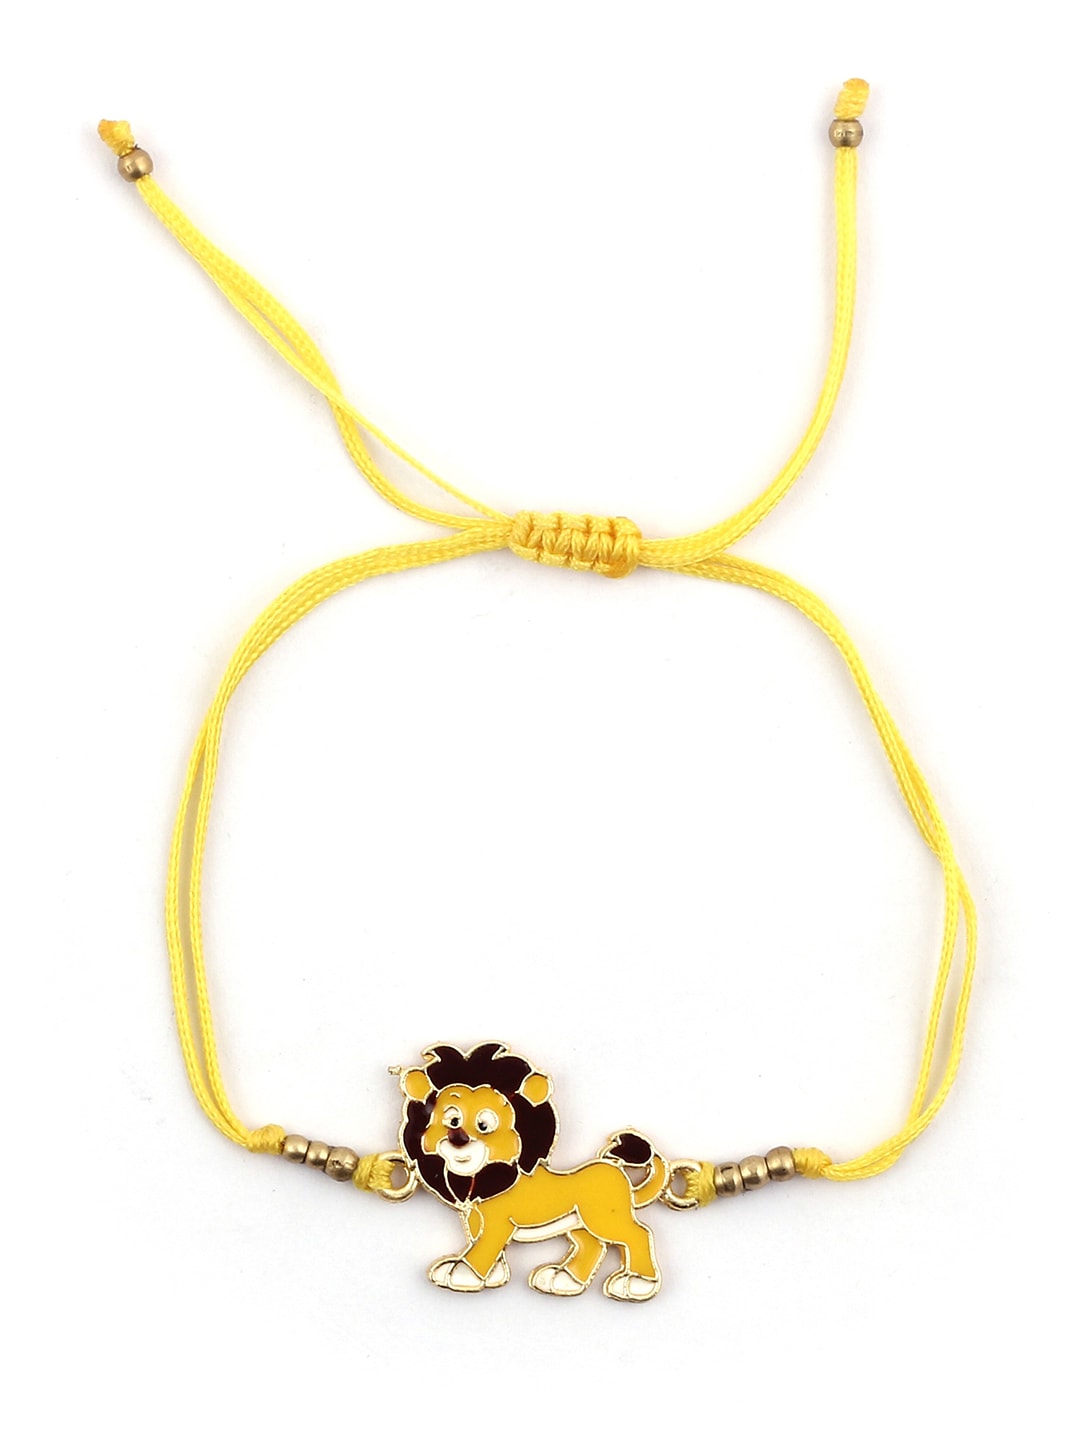 EL REGALO Girls Set of 2 Yellow & Blue Charm Bracelets - for Kids-Girls
Style ID: 17314094